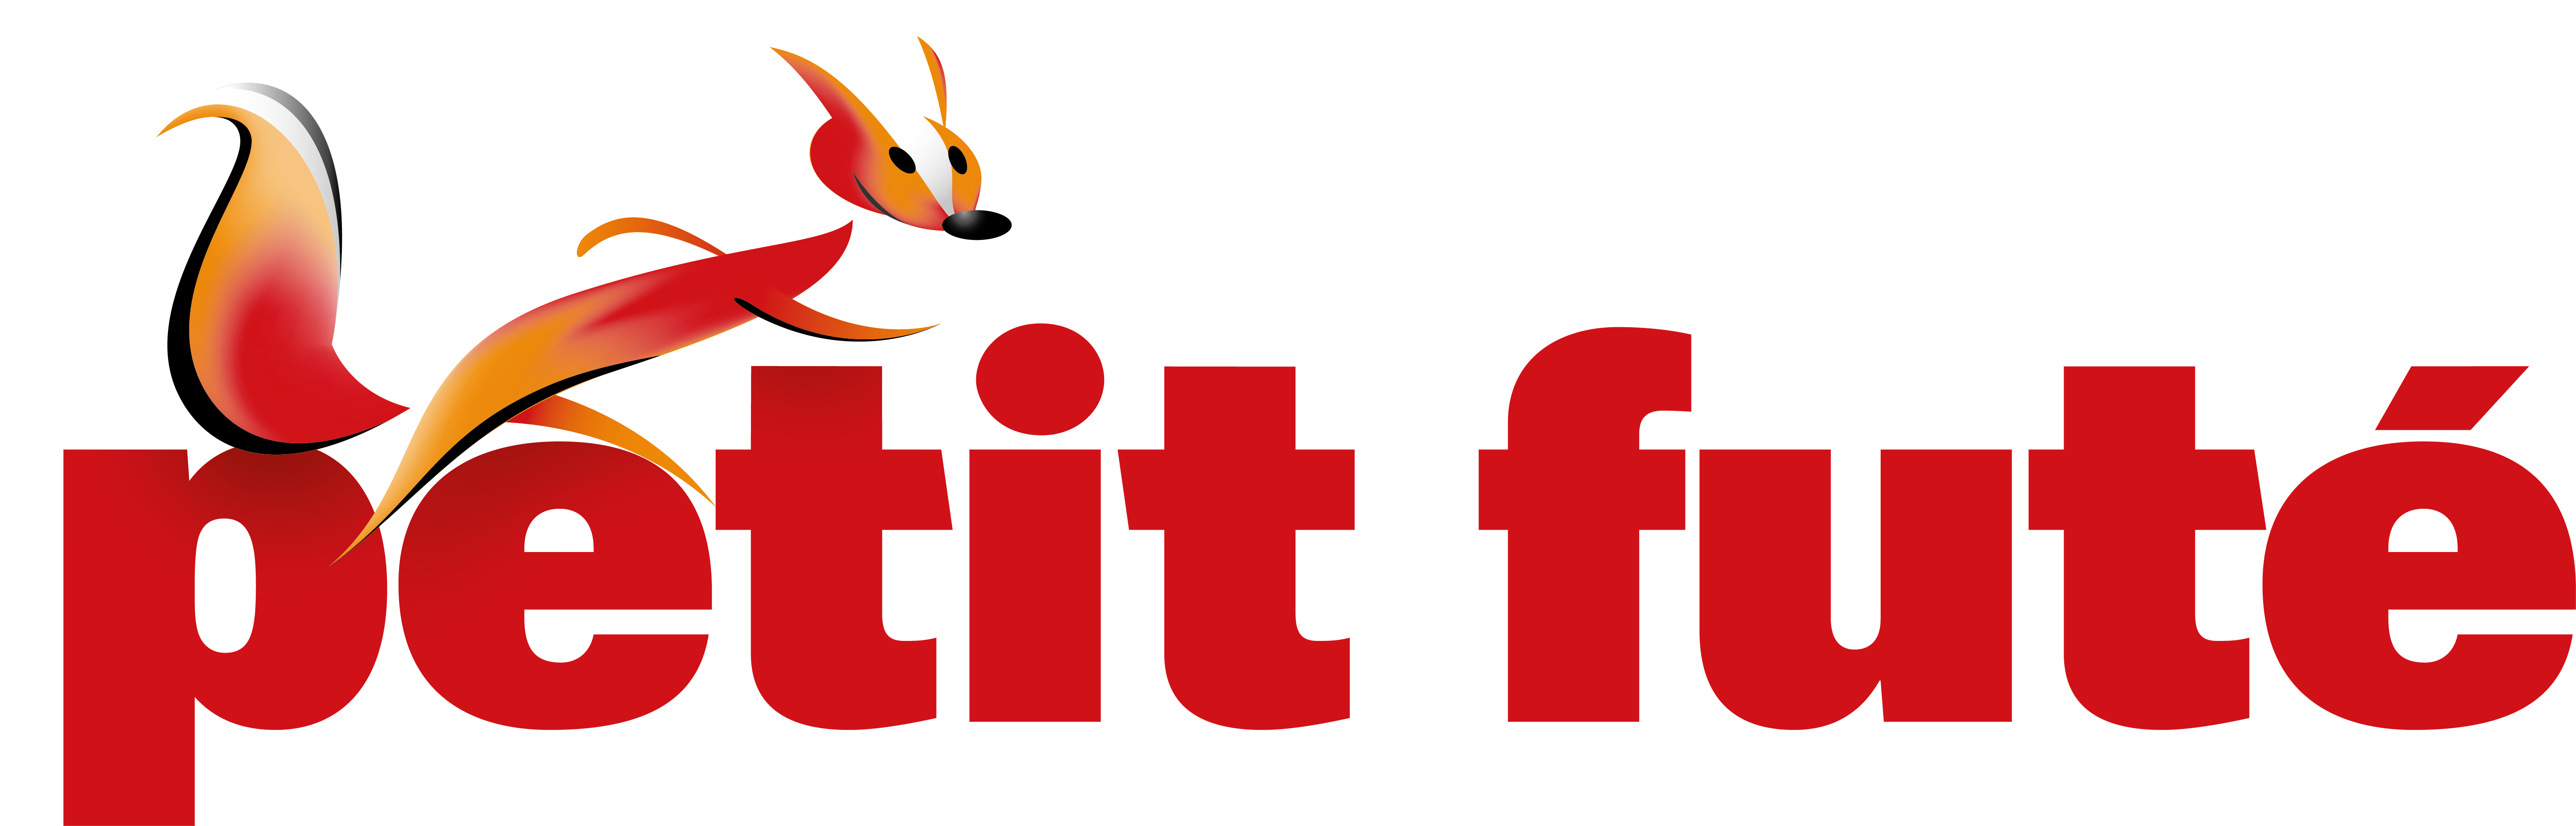 Petit Fute Logo